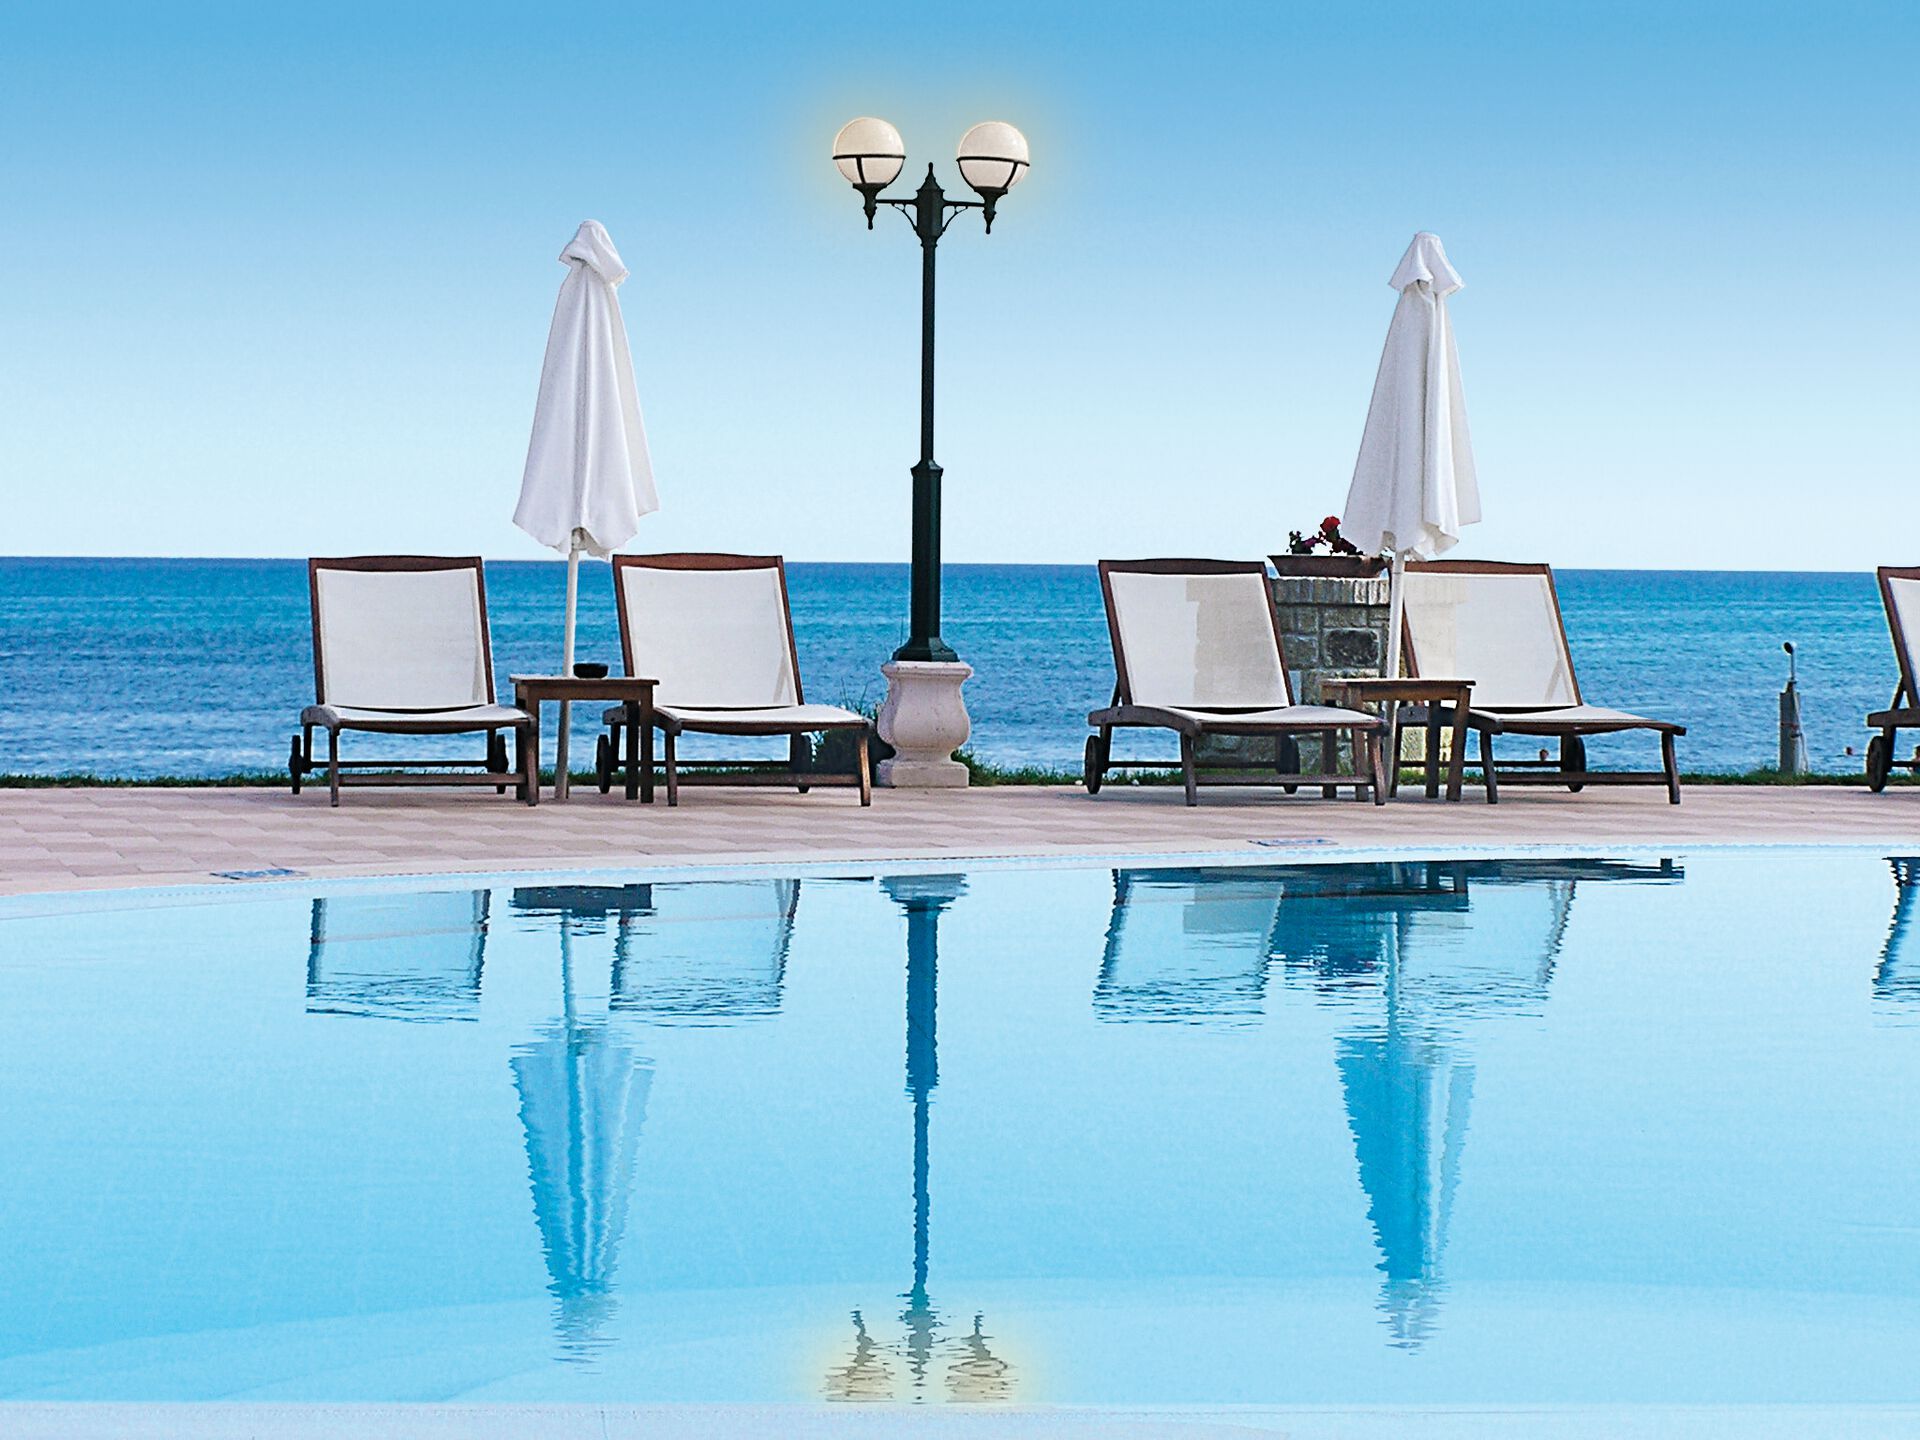 Grèce - Iles grecques - Zante - Hôtel Mediterranean Beach Resort & Spa 5*